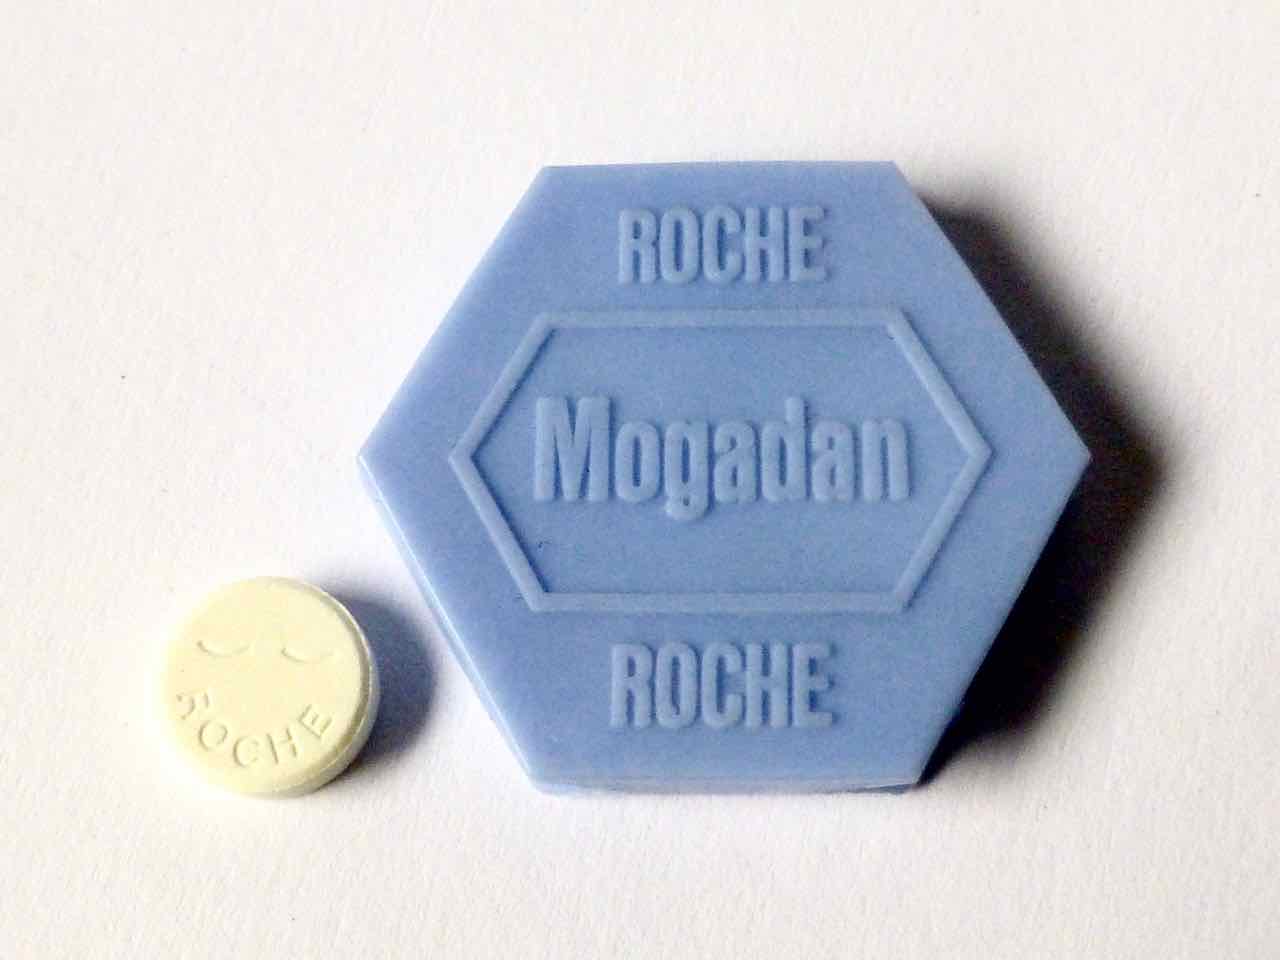 MOGADON Roche